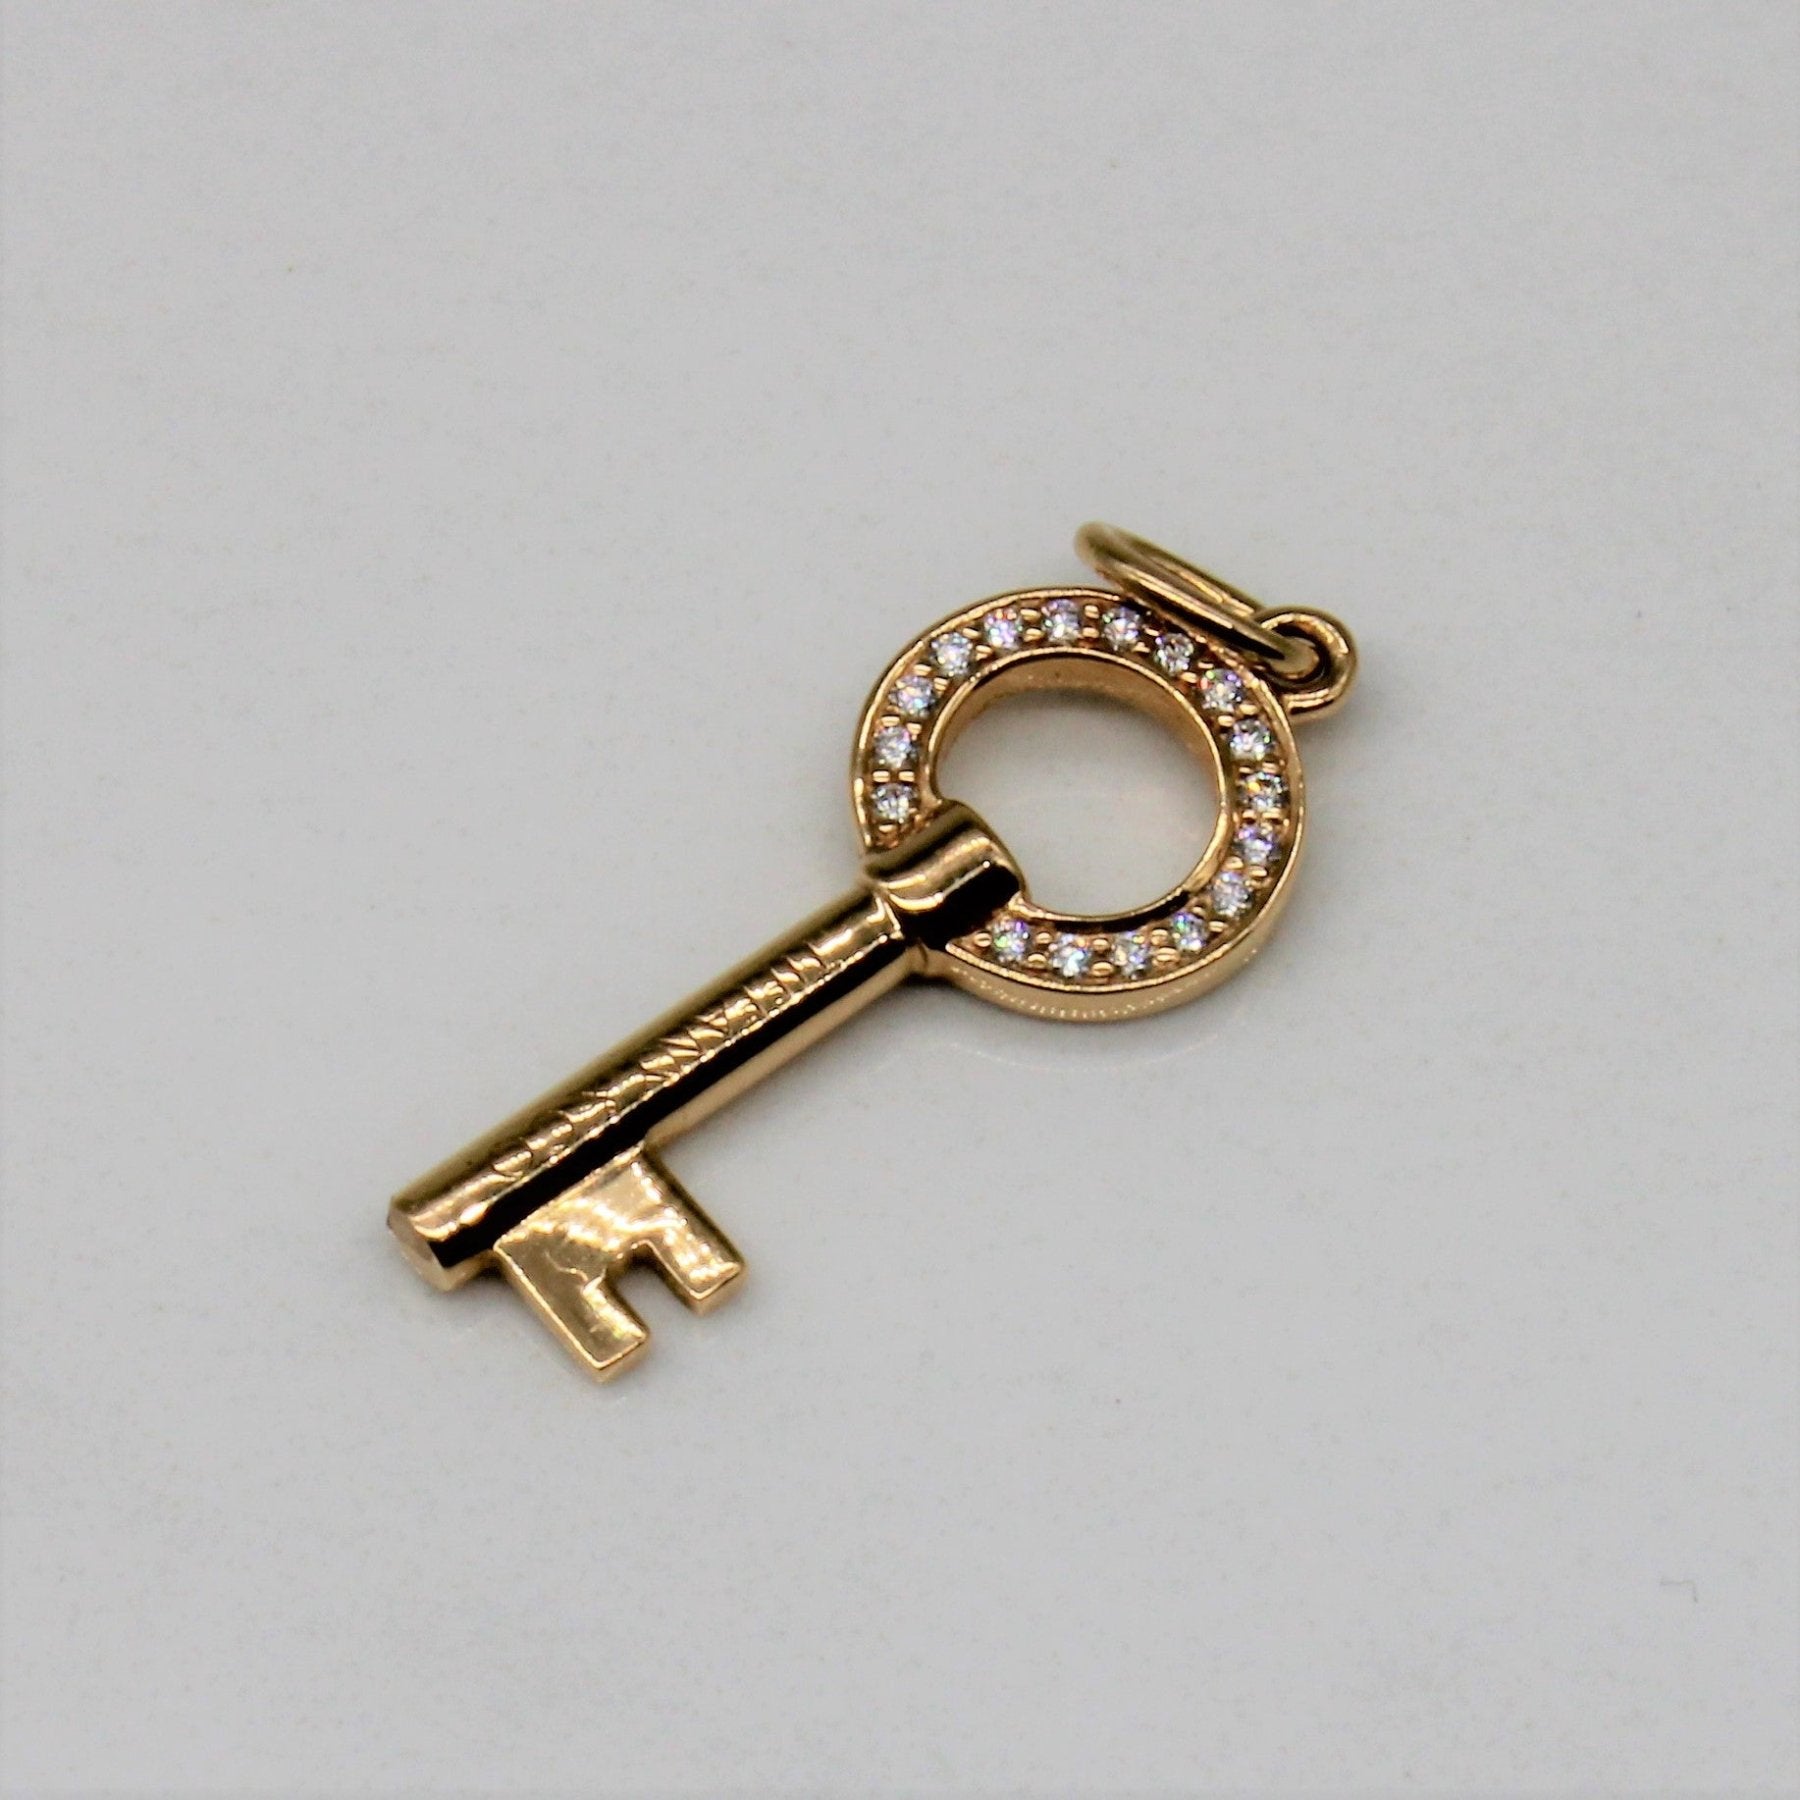 'Tiffany & Co.' Modern Keys Open Round Key Pendant - 100 Ways